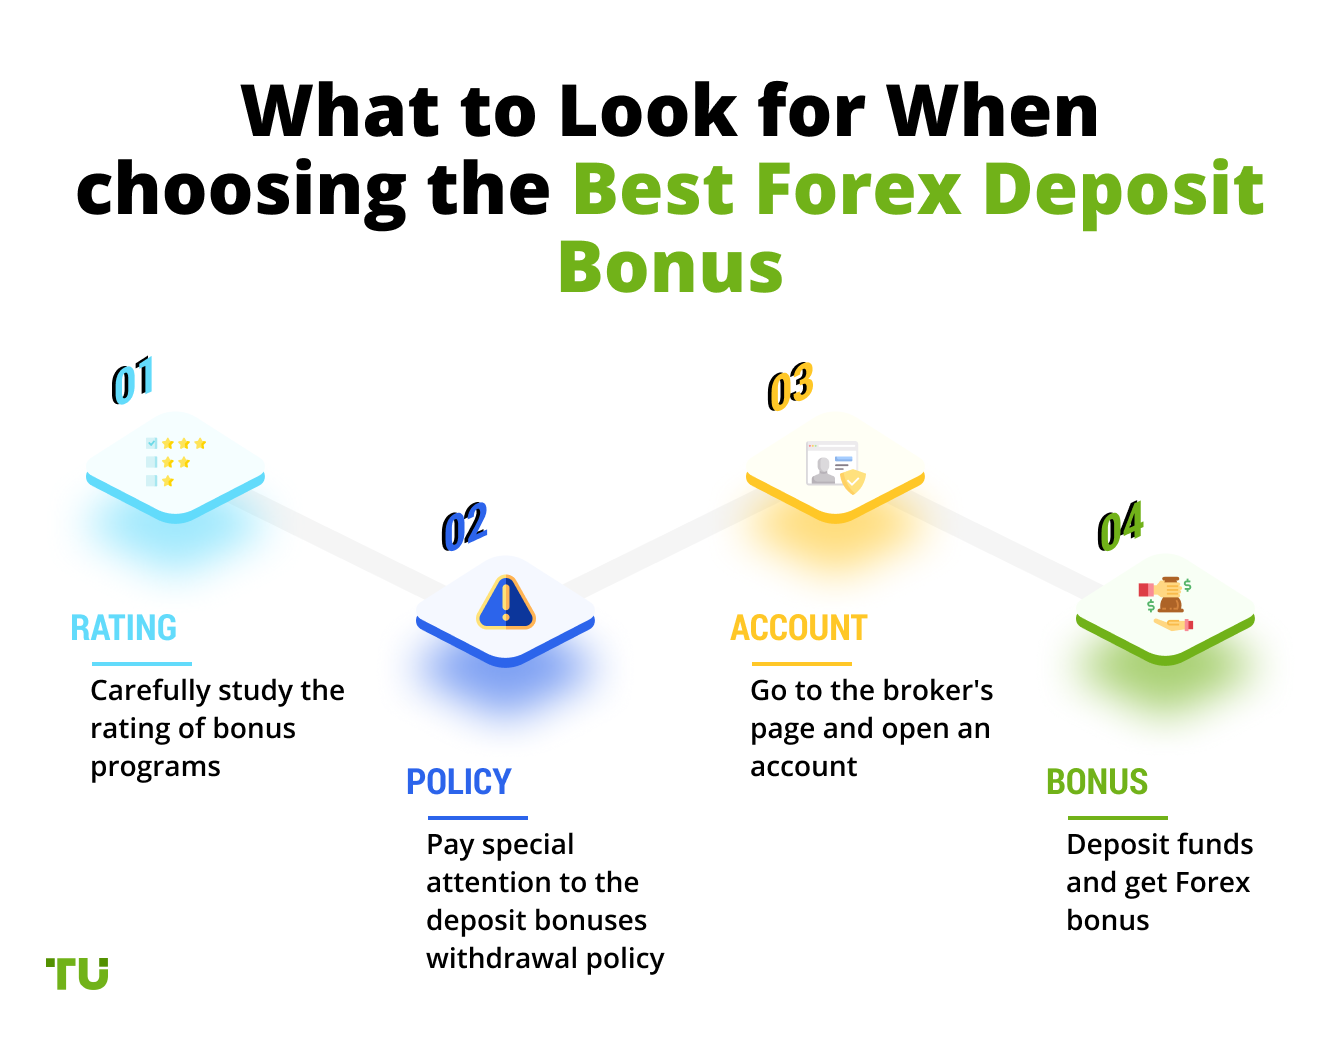 How to get a bonus on forex best dividend stocks nz 2019